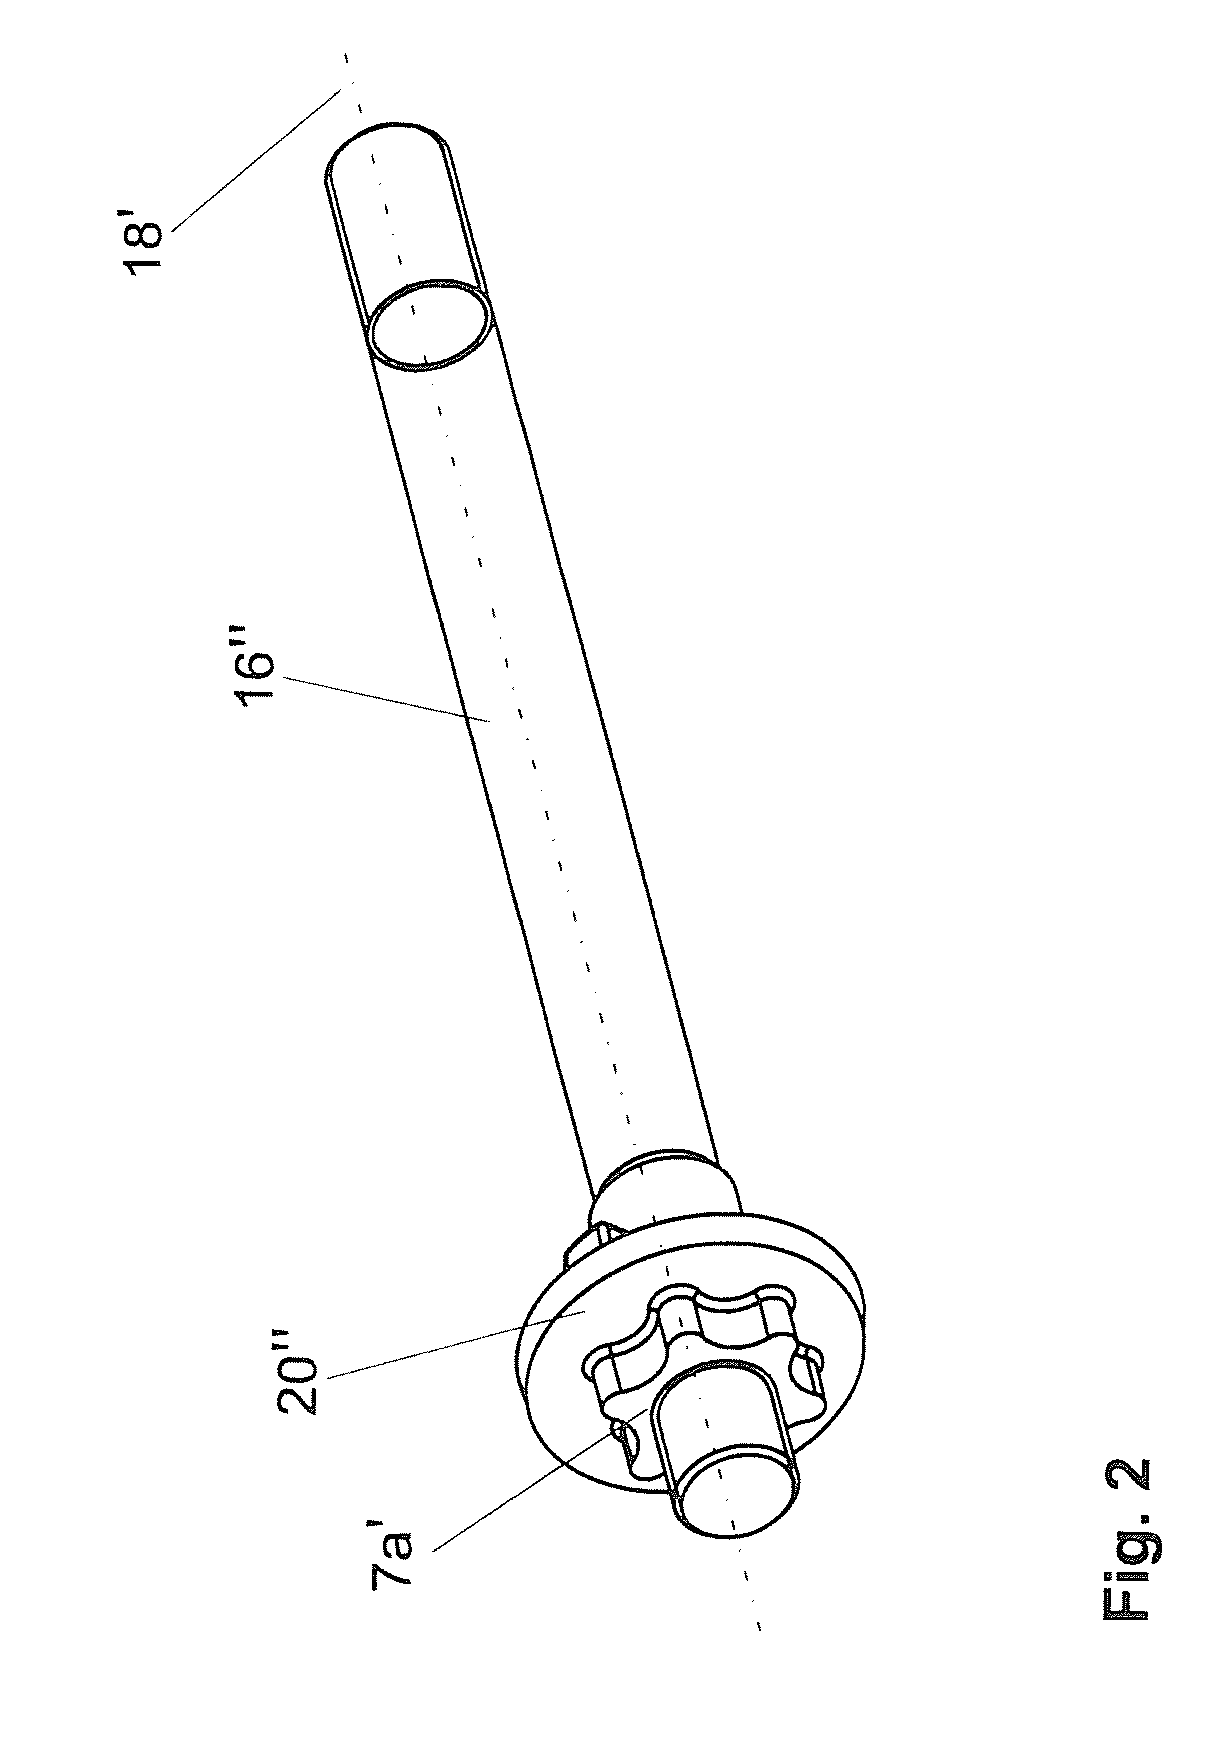 Adjustable steering column for a motor vehicle